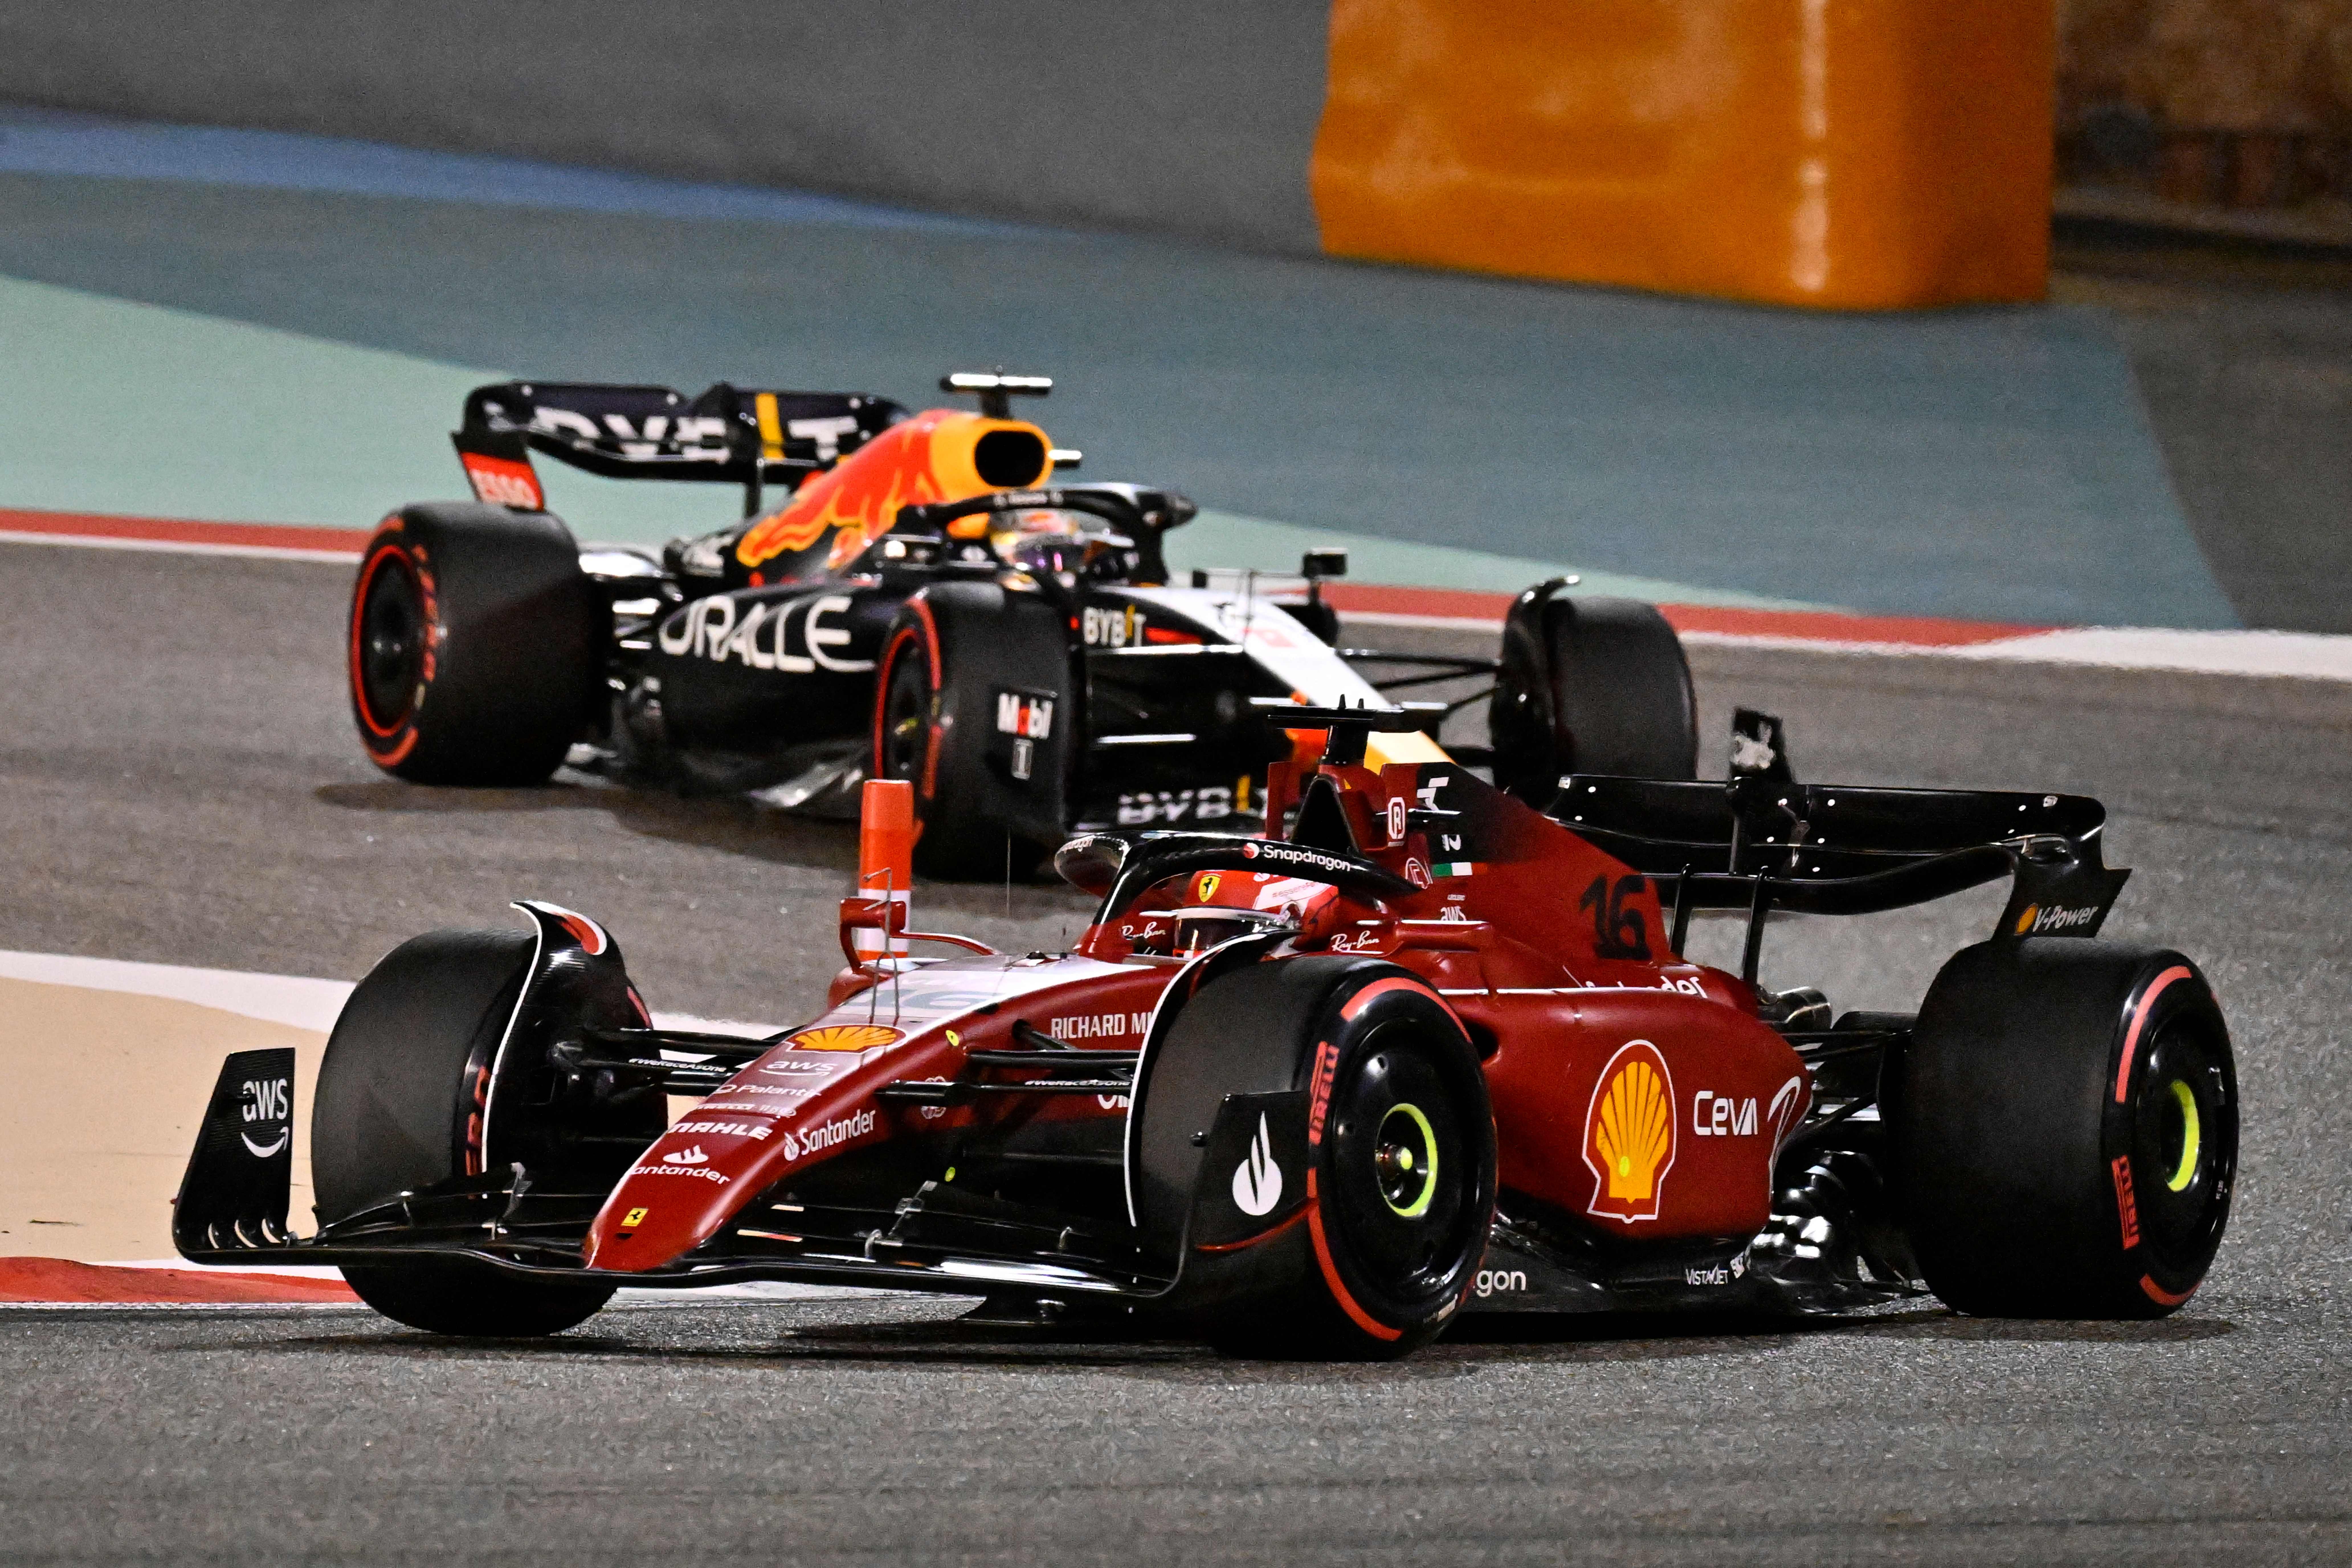 Charles Leclerc won the Bahrain Grand prix after fending off Max Verstappen.